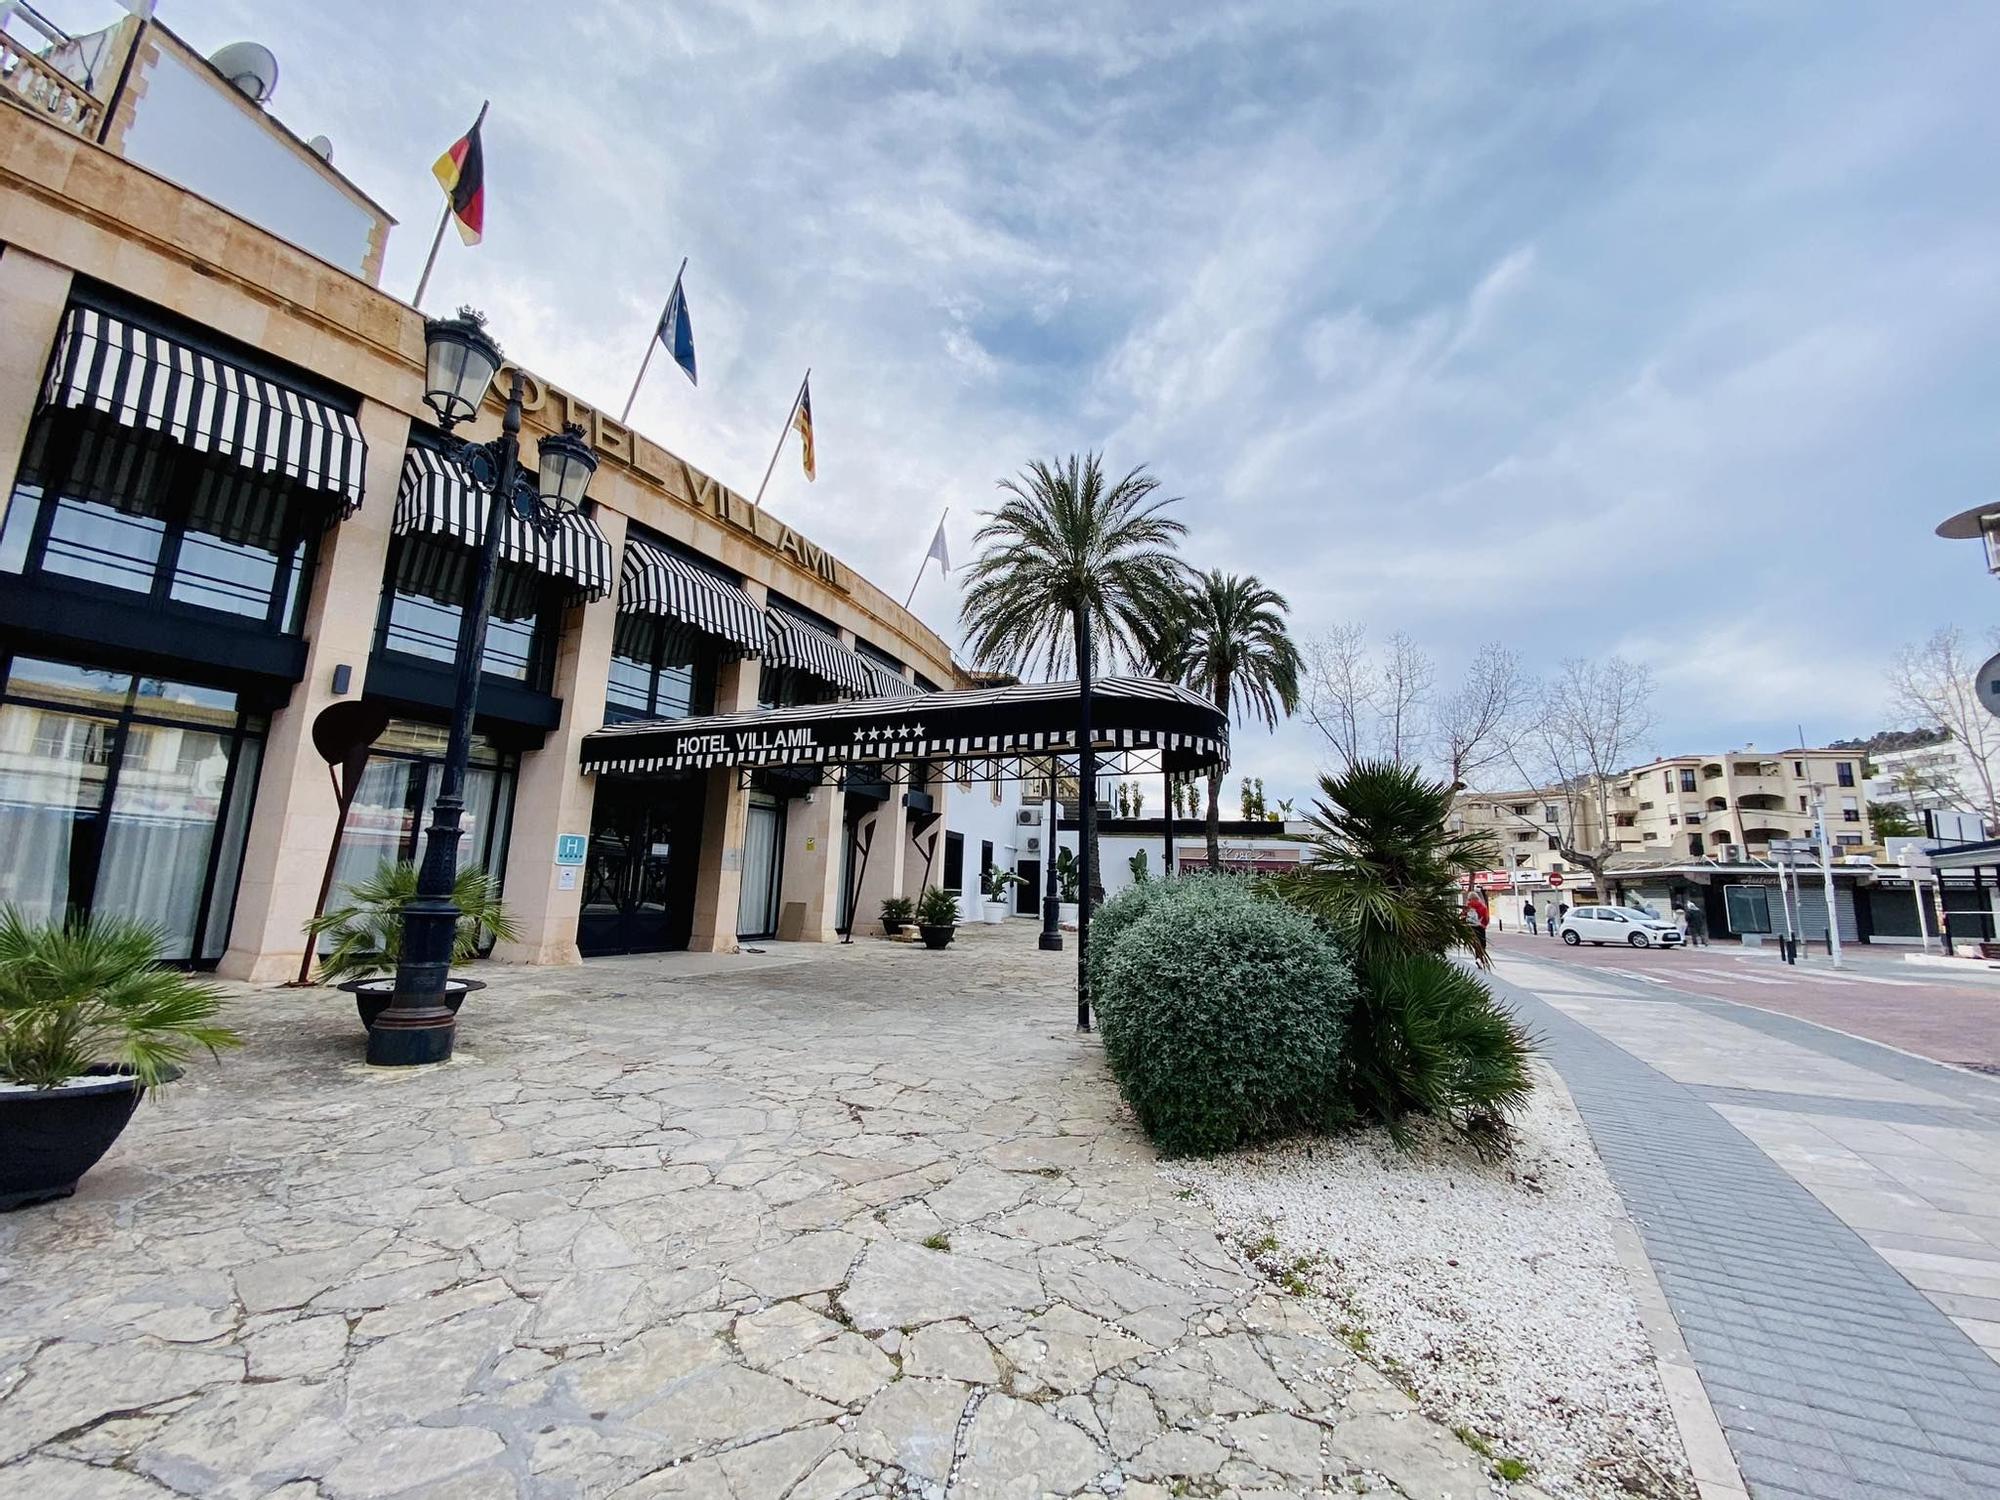 Baustelle an Promenade, geschlossene Hotels, Hunde am Strand: So ruhig geht es derzeit noch in Peguera zu